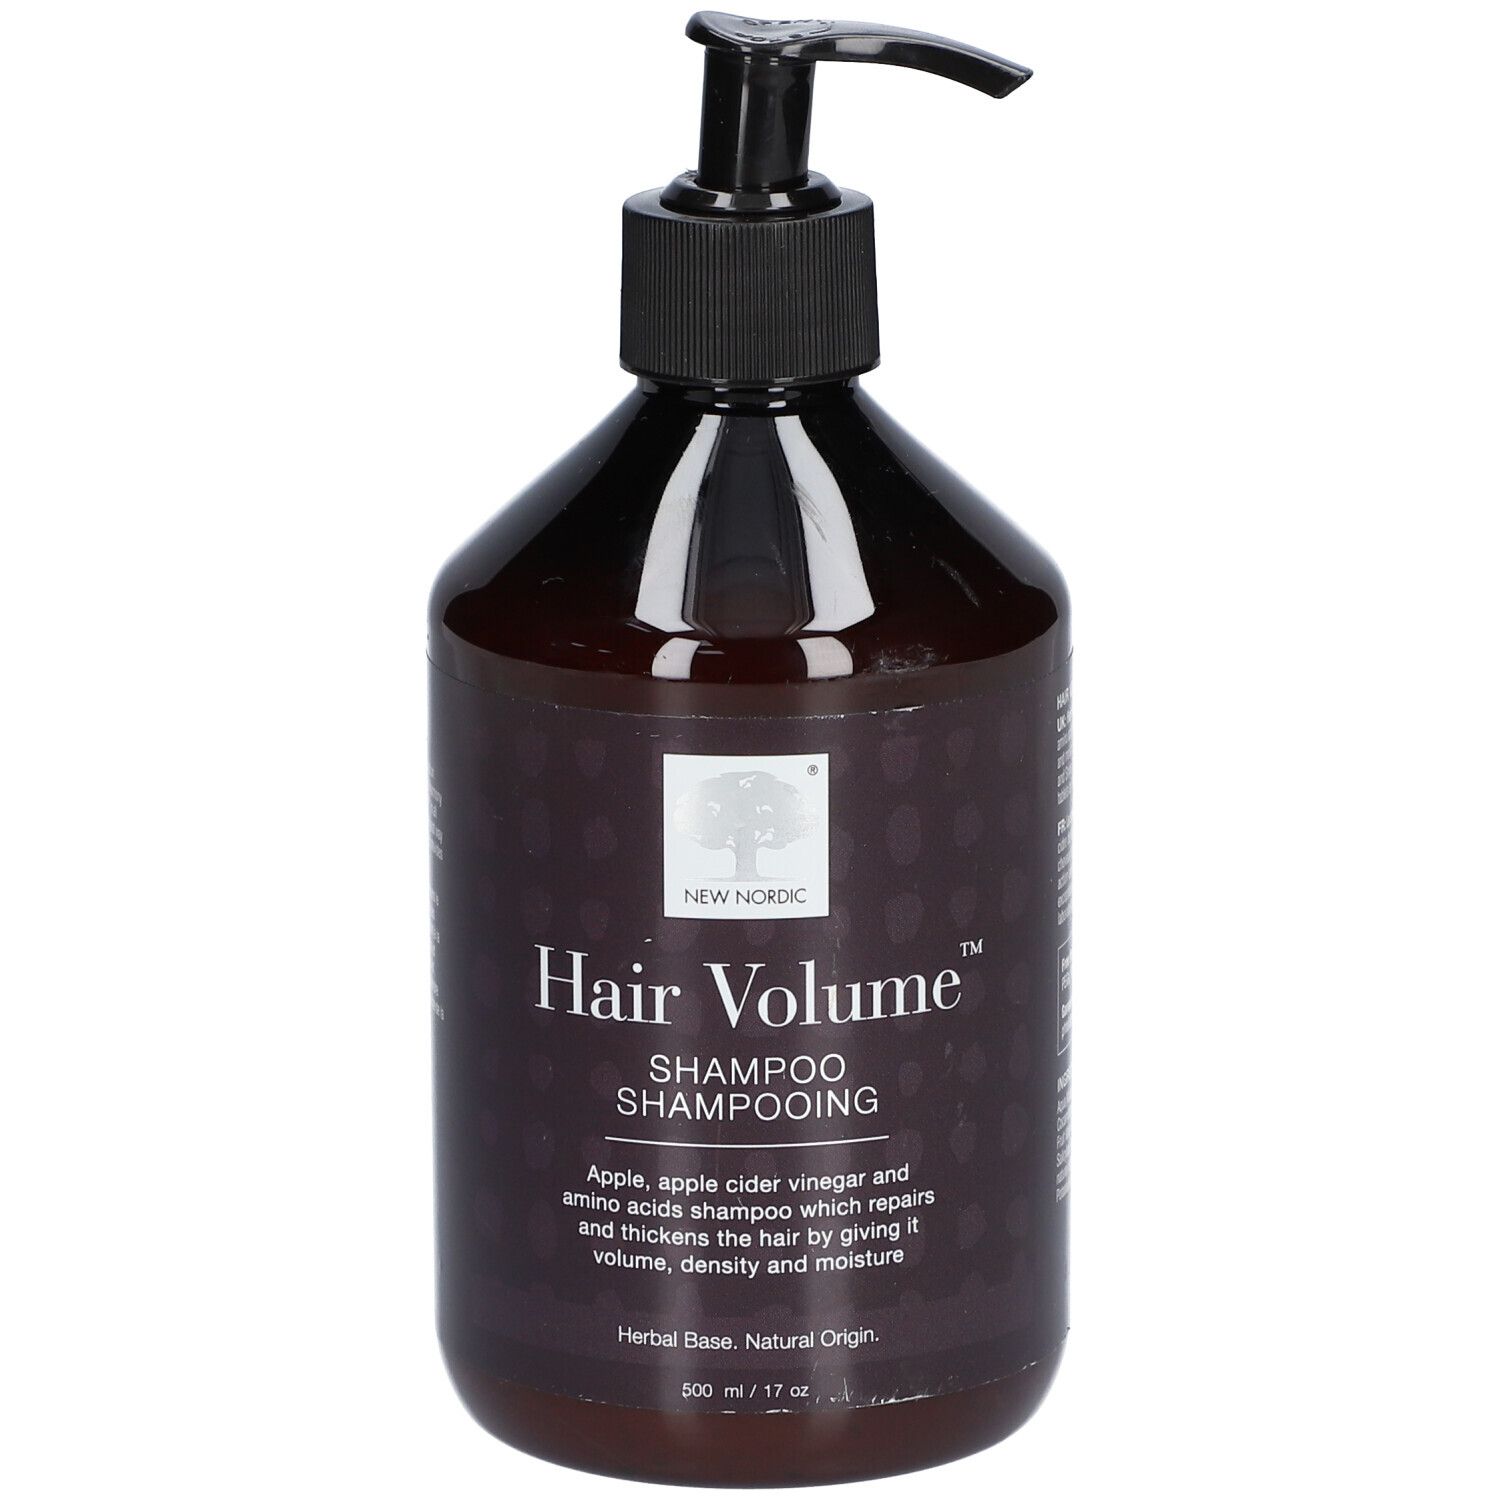 NEW Nordic Hair Volume™ Shampoo